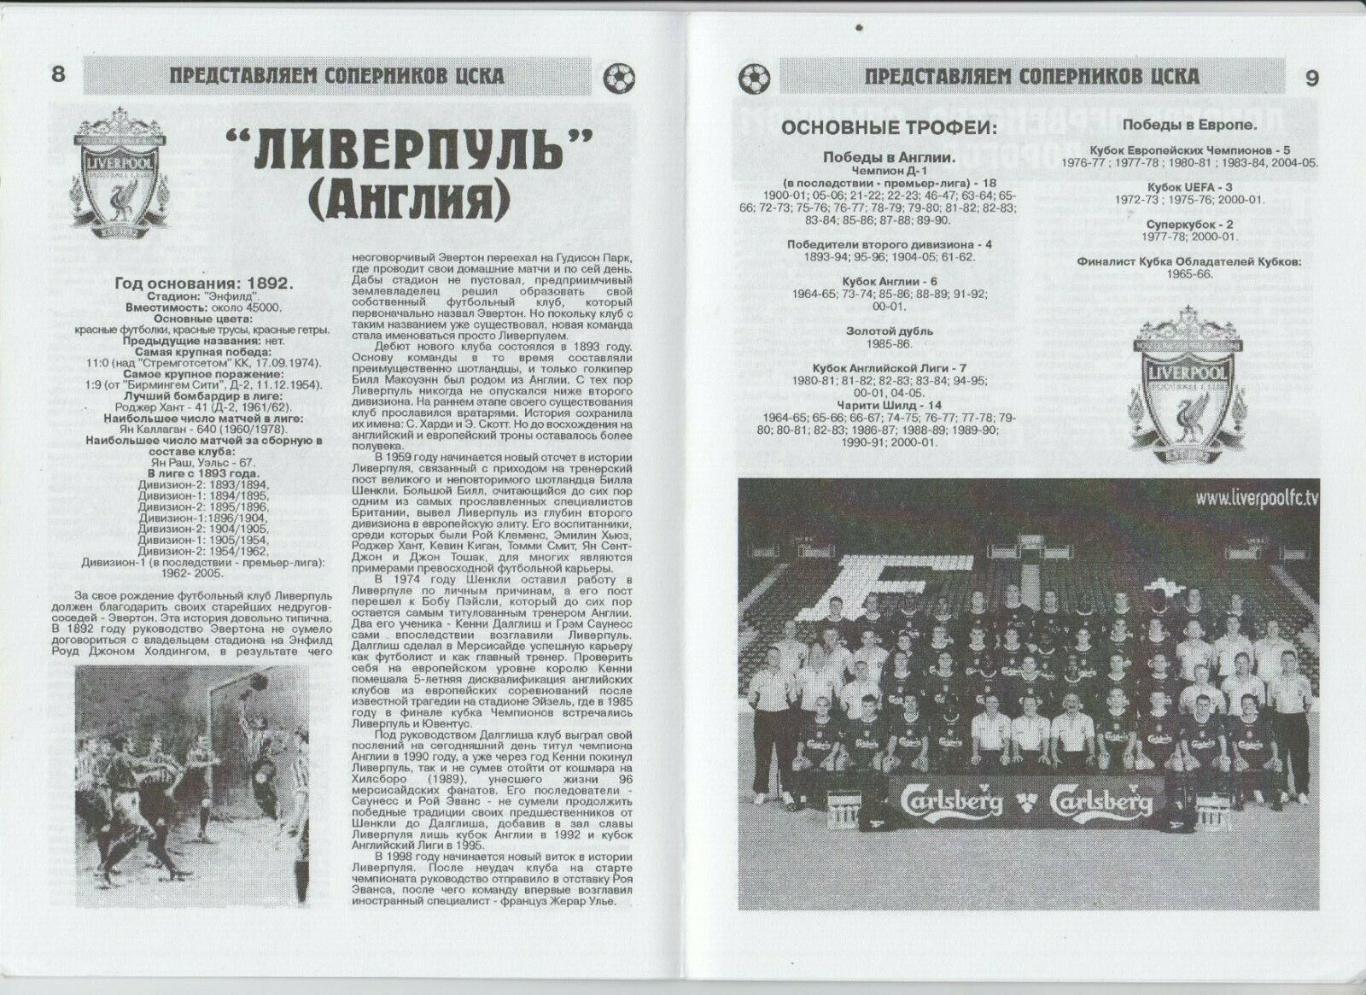 Ливерпуль - ЦСКА Москва 2005 супер кубок УЕФА 2